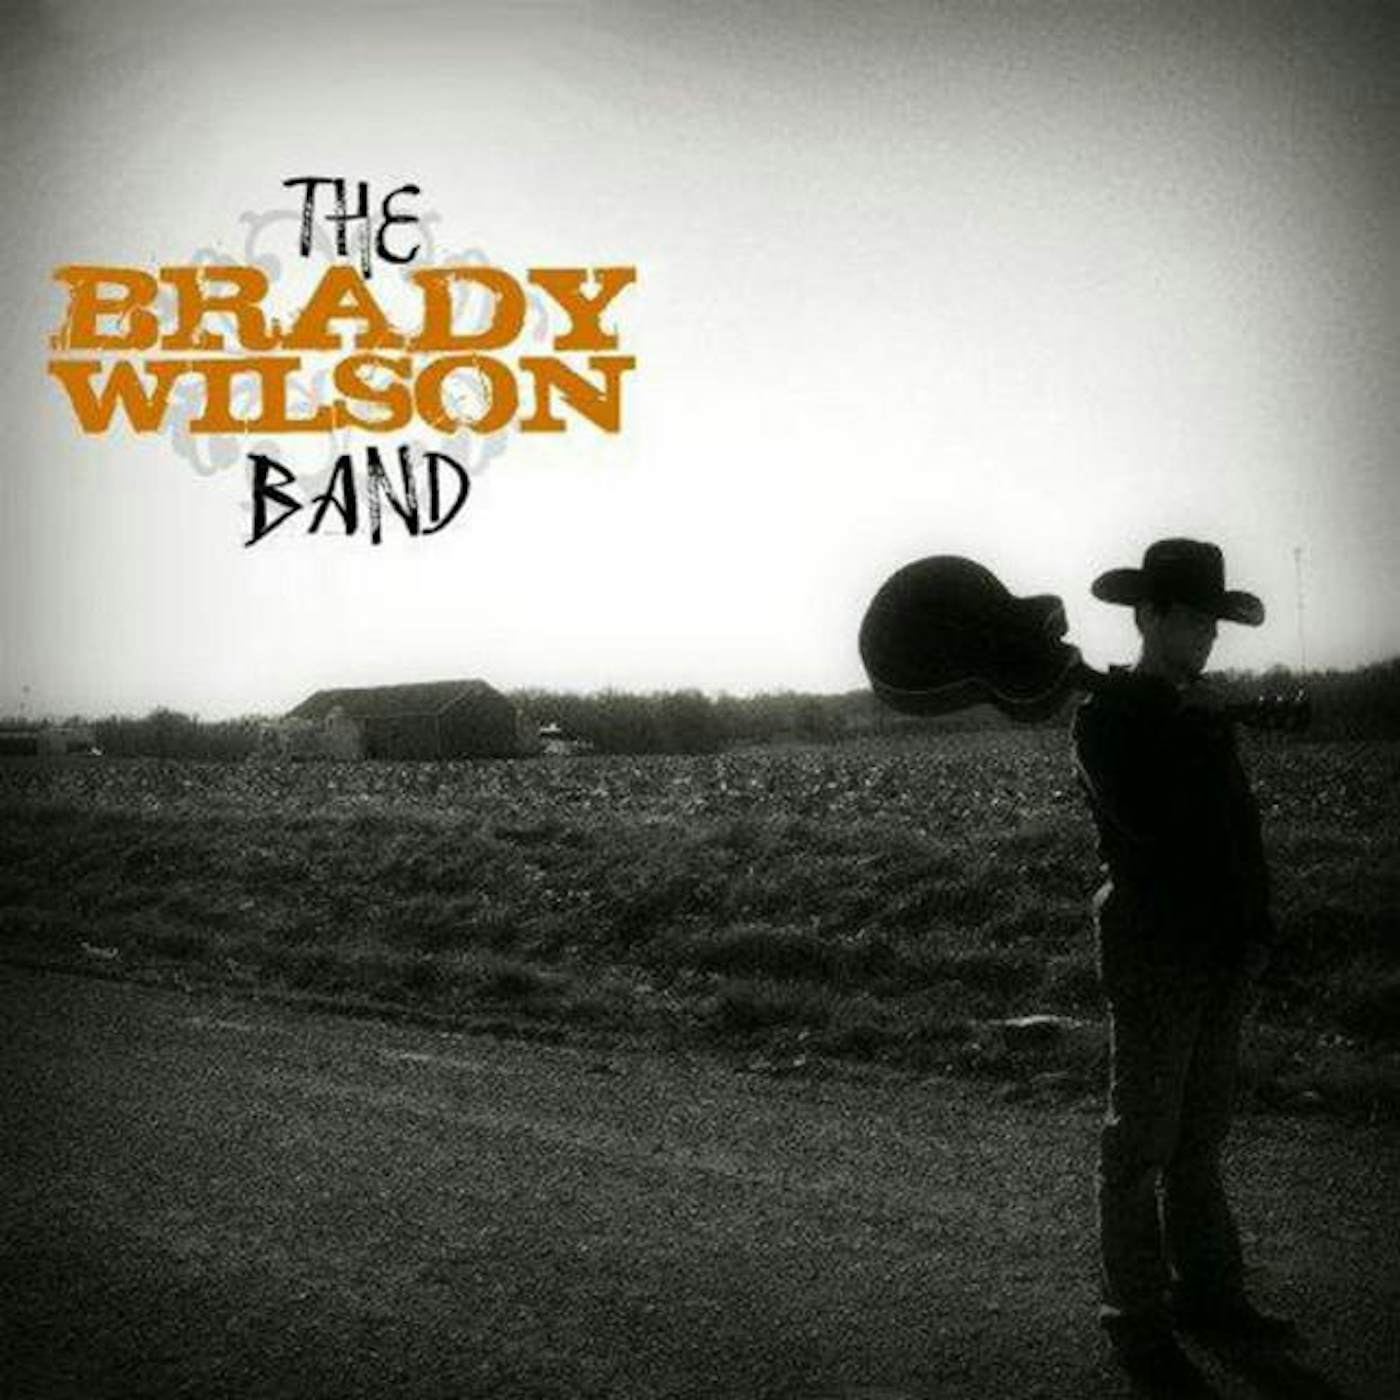 The Brady Wilson Band